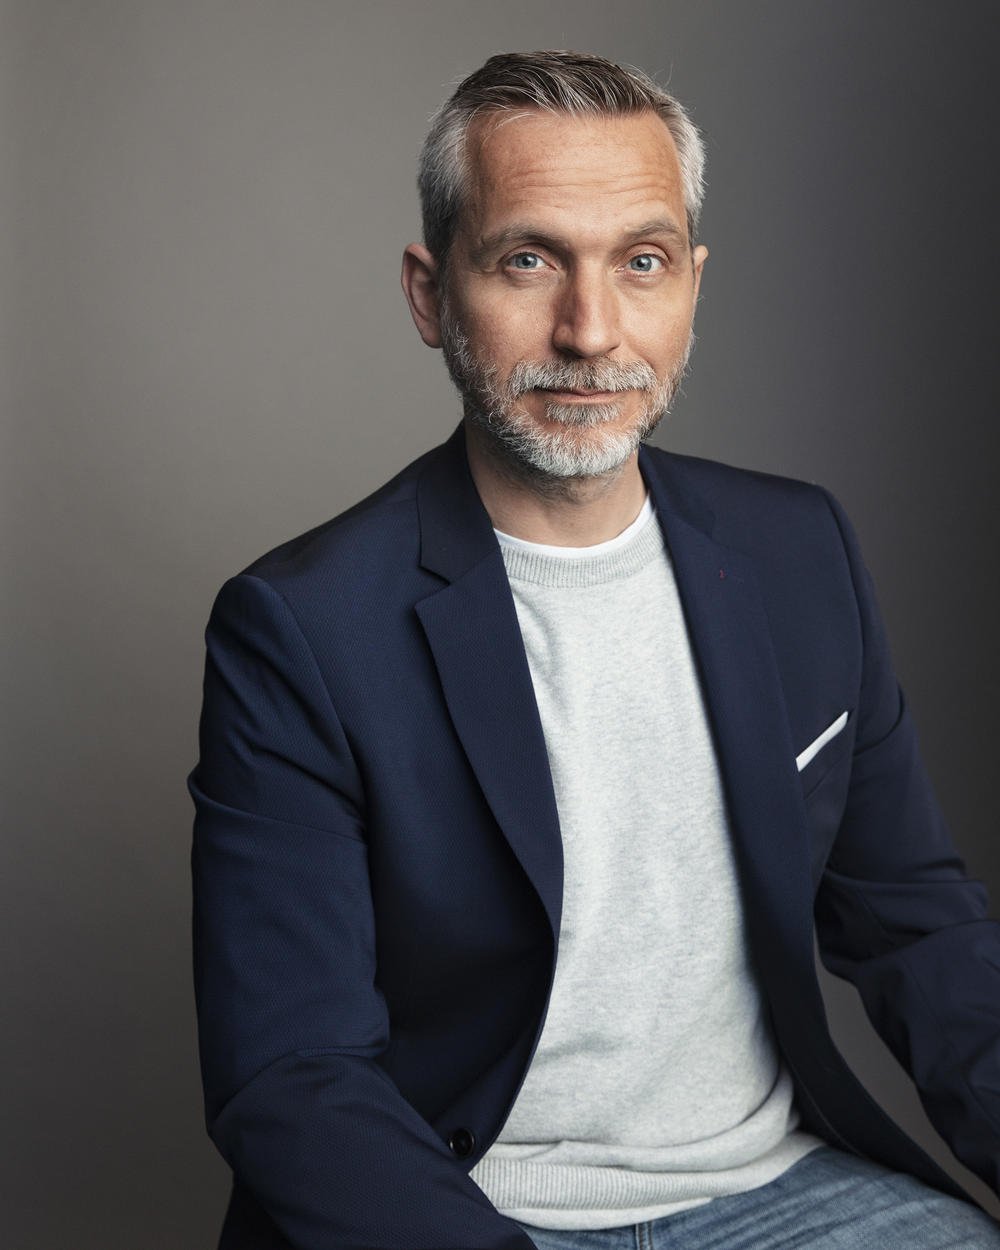 Olivier Norek portrait